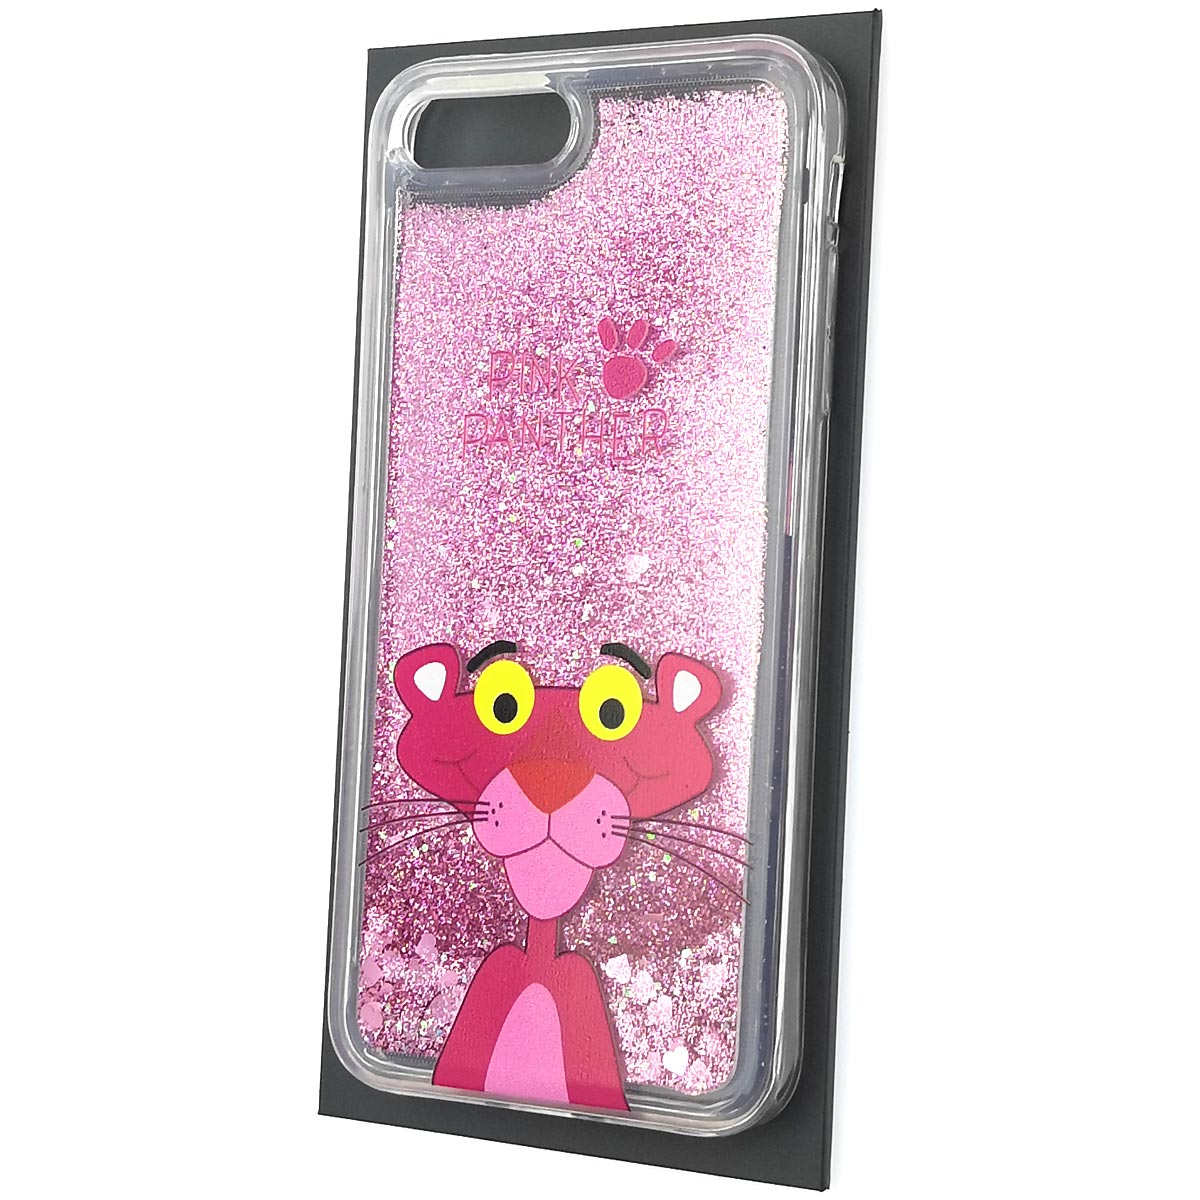 Чехол накладка TransFusion для APPLE iPhone 7 Plus, iPhone 8 Plus, силикон, переливашка, рисунок Розовая Пантера